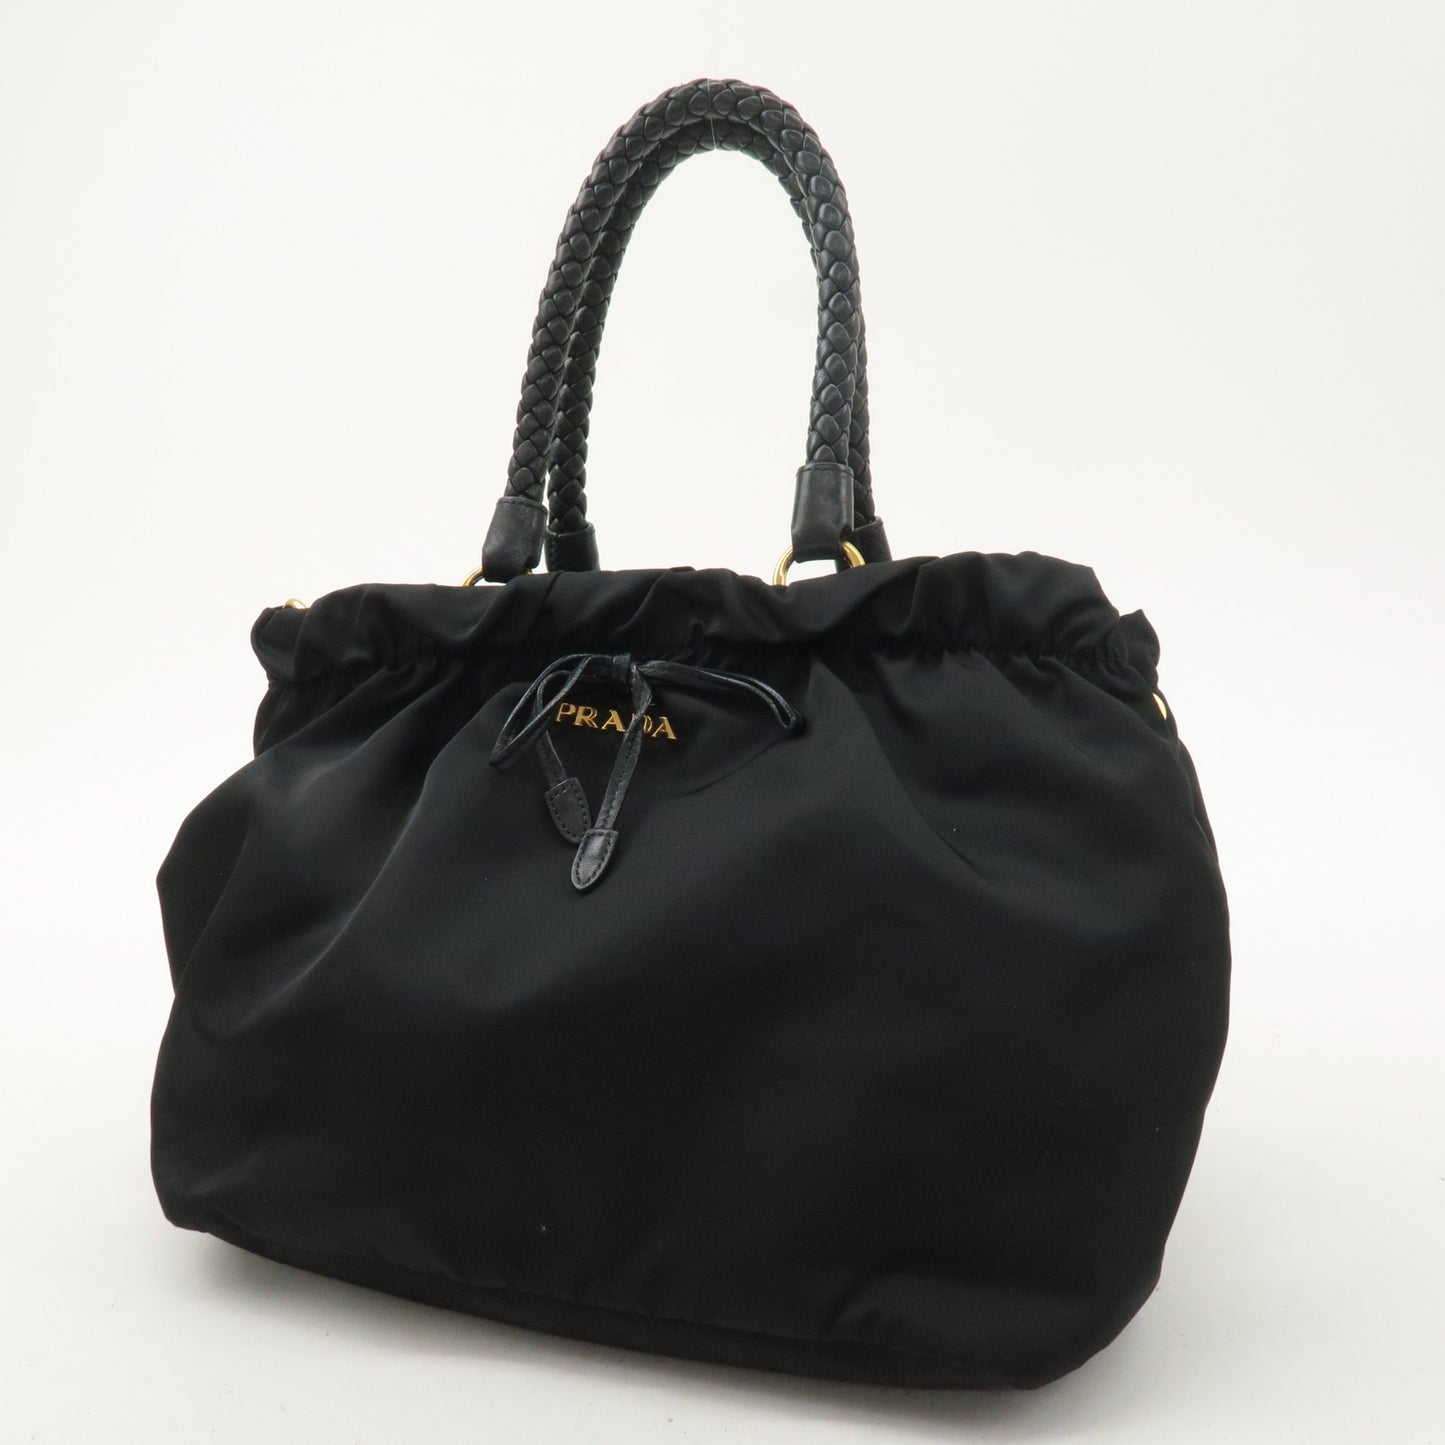 PRADA Logo Nylon Leather Tote Bag Hand Bag Black Gold HDW